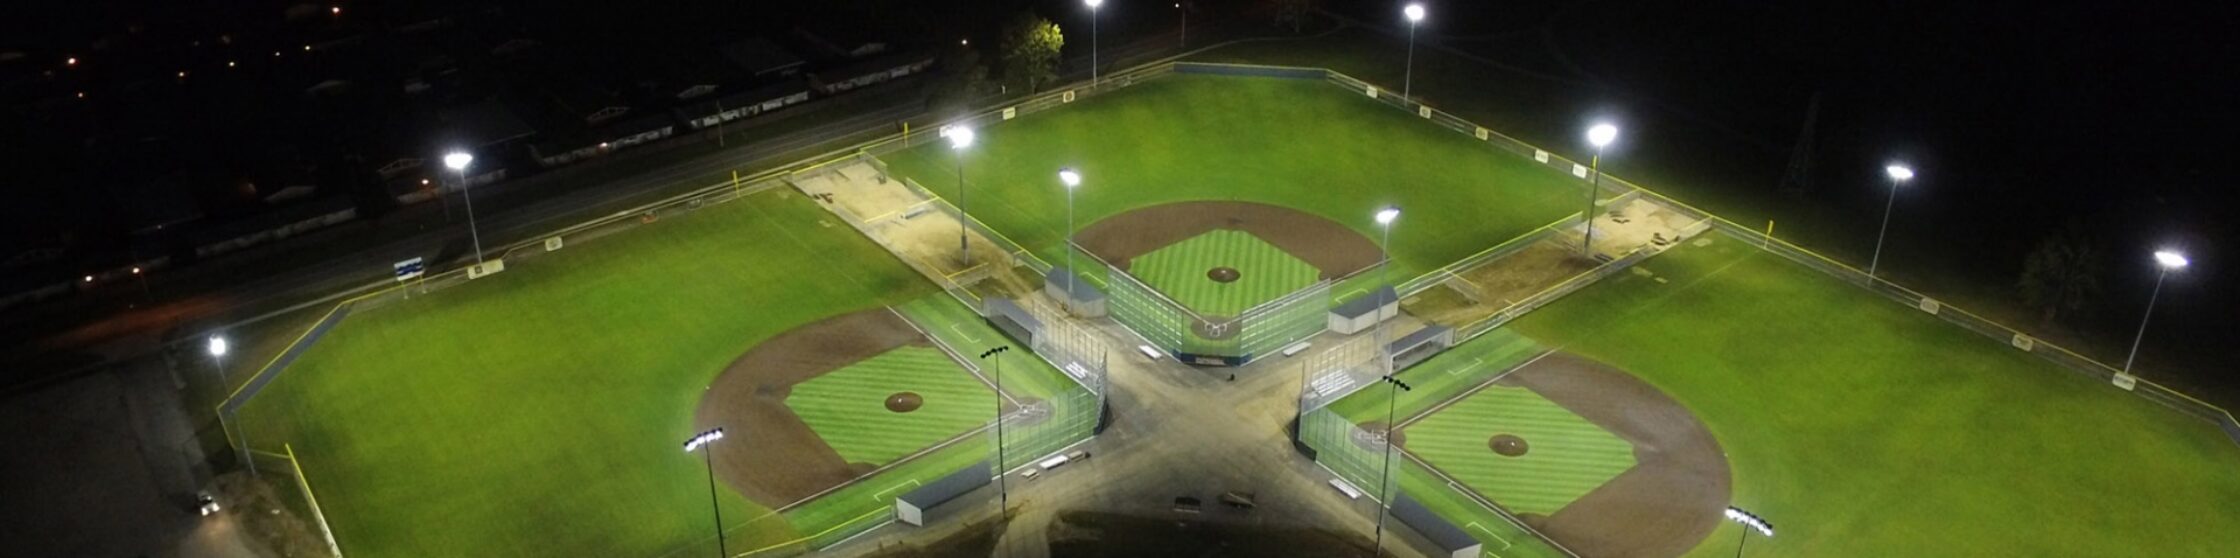 Ash Centre World Baseball Academy Fields Fort Wayne